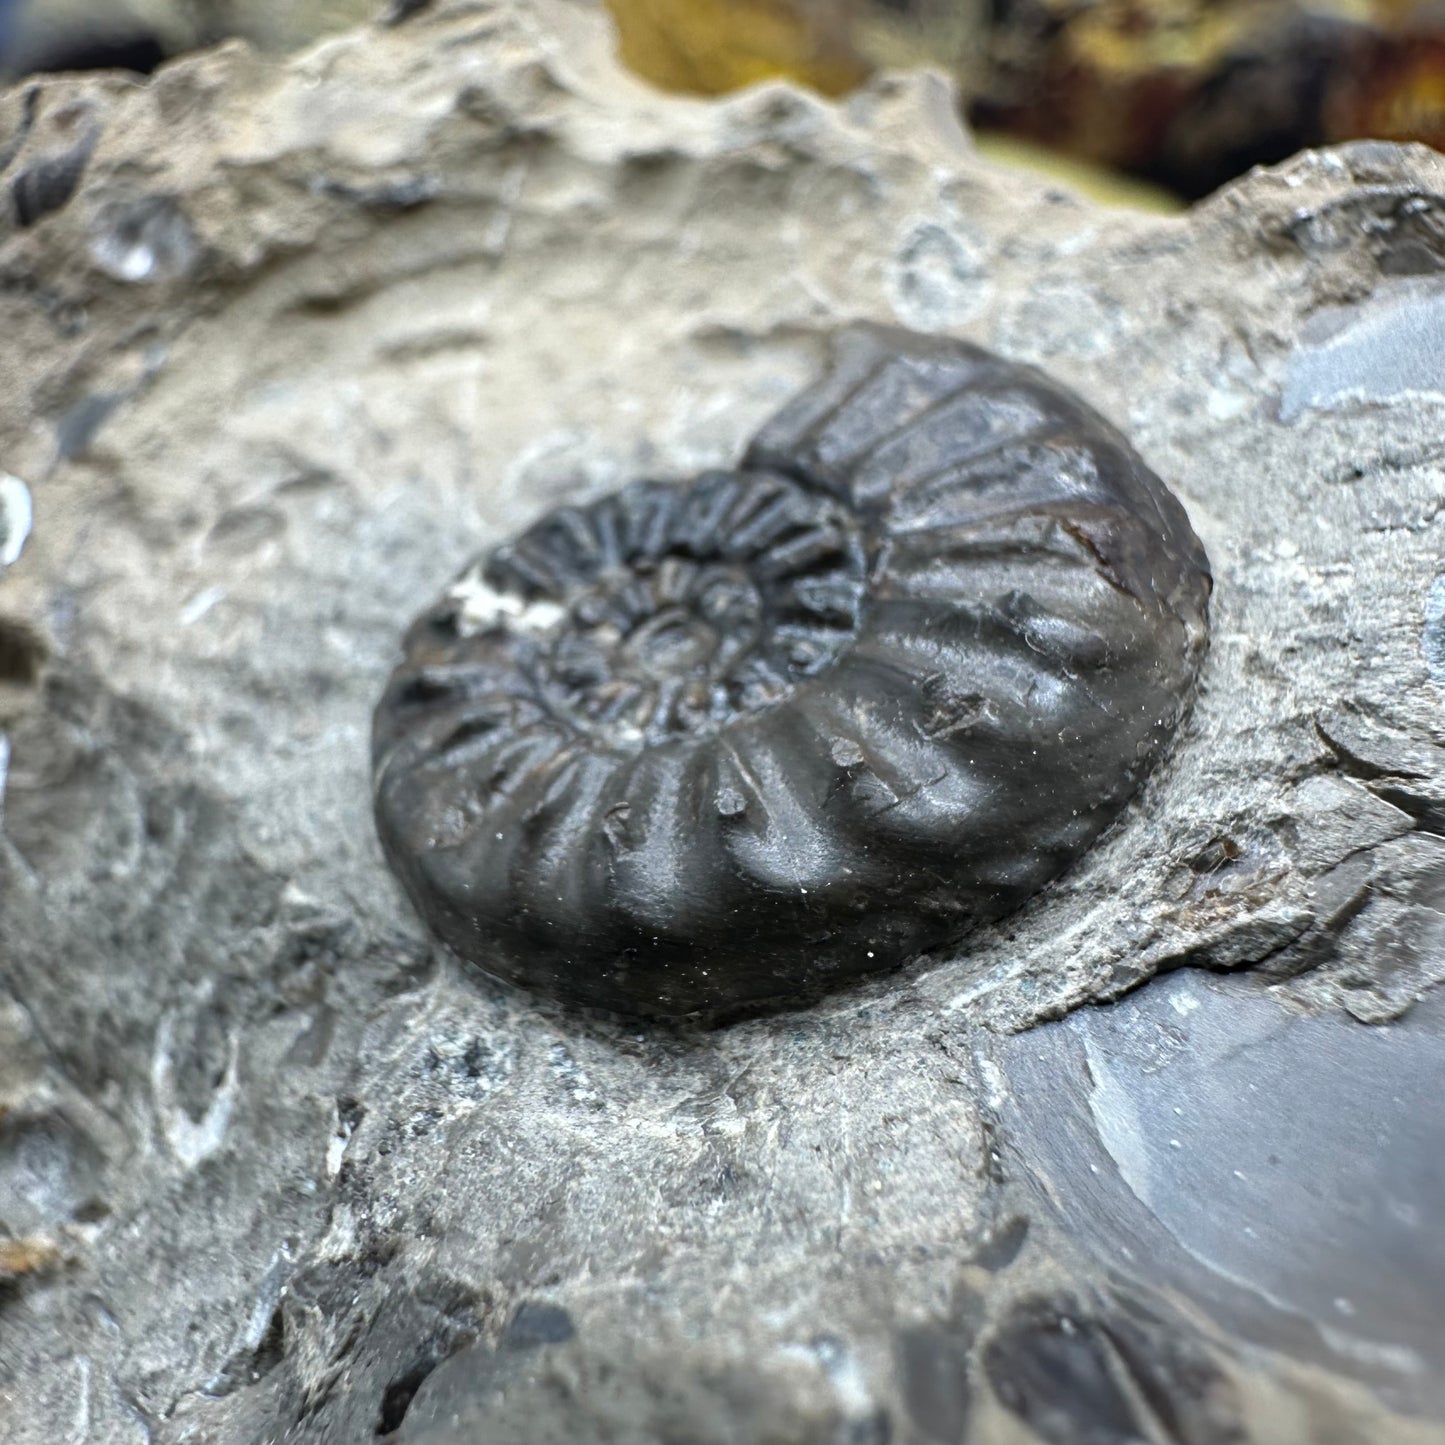 Amaltheus subnodosus ammonite fossil - Whitby, North Yorkshire Jurassic Coast Yorkshire Fossils